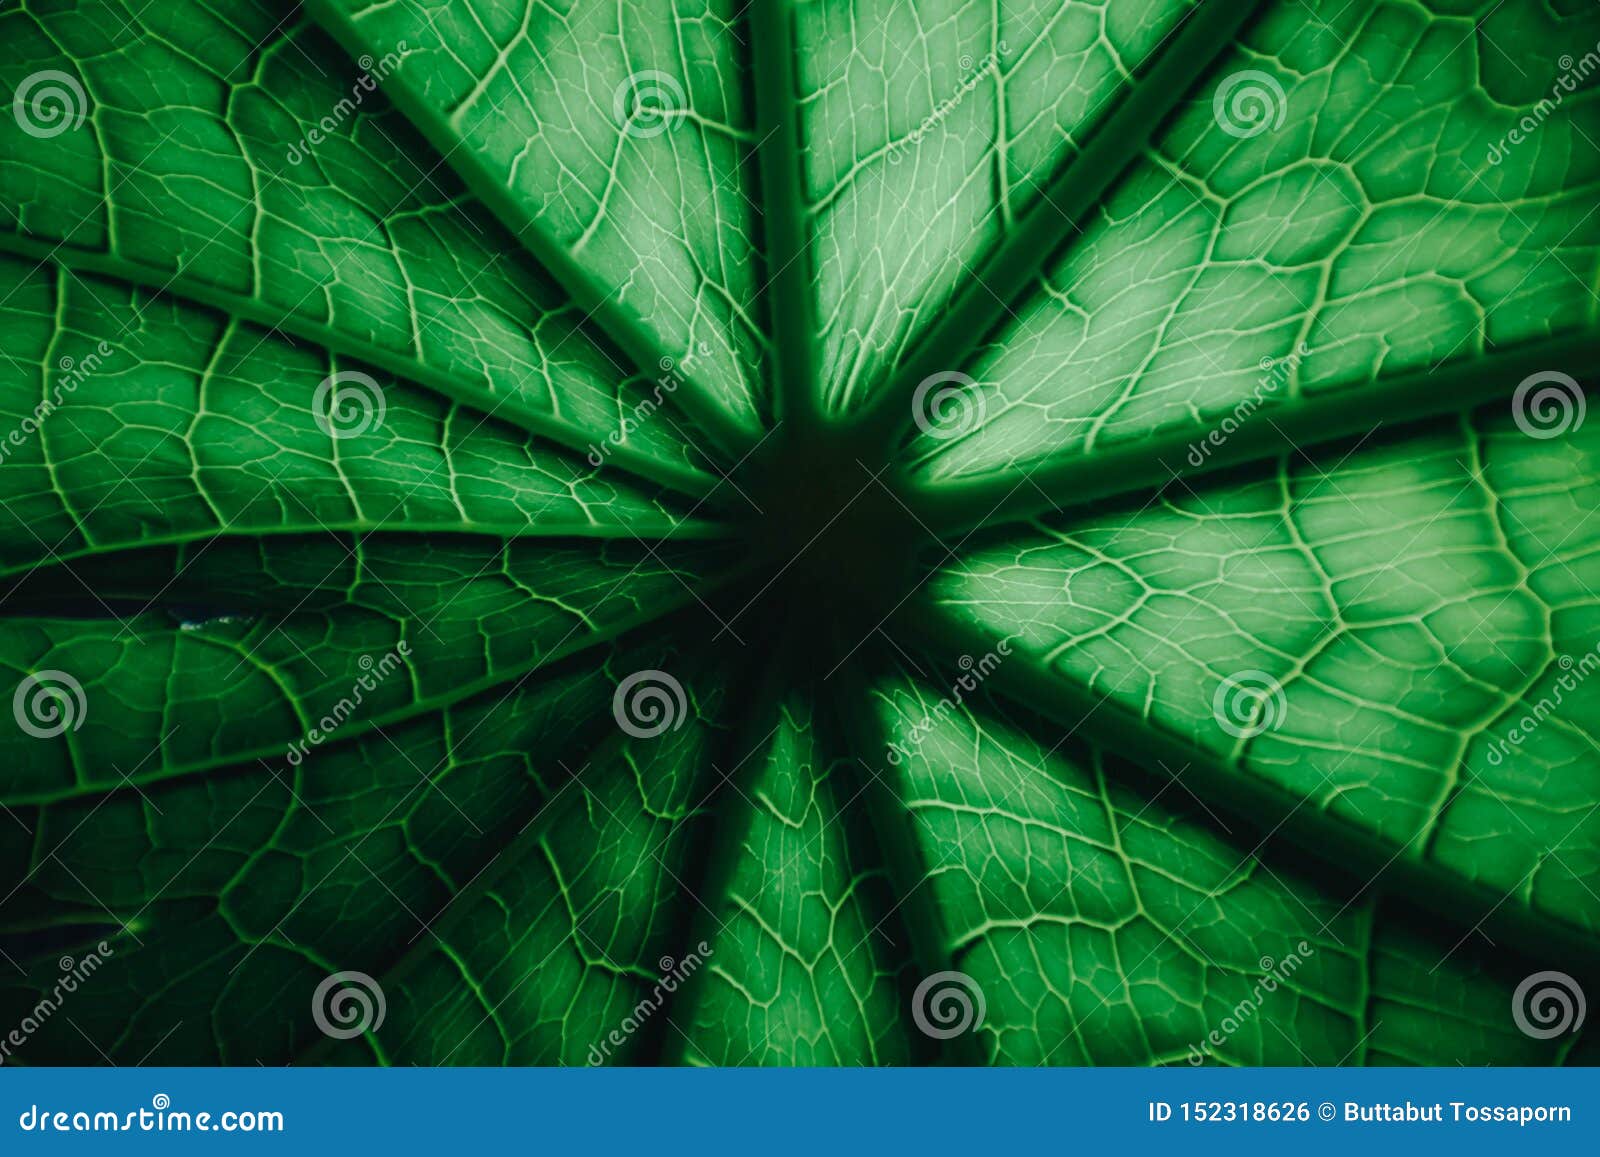 green leaf on background, lamina, net